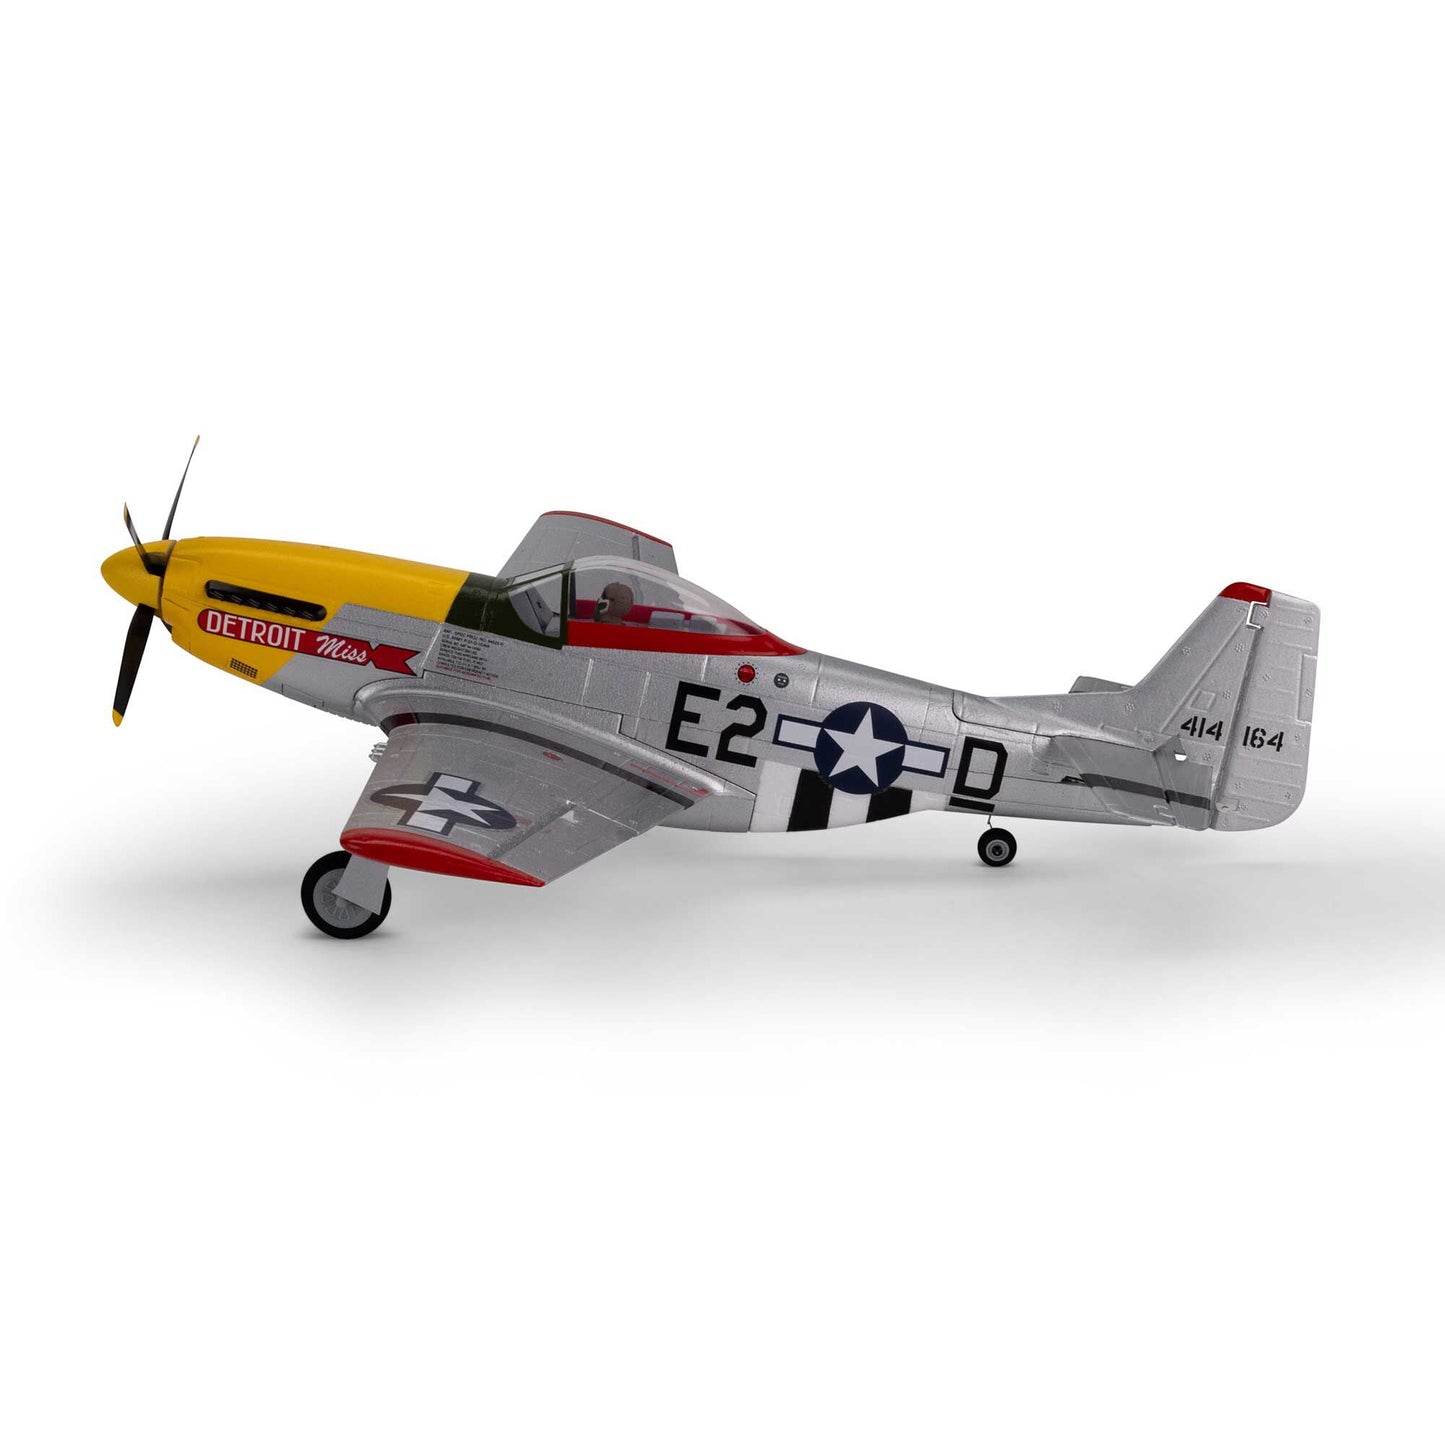 UMX P-51D "Detroit Miss" BNF Basic